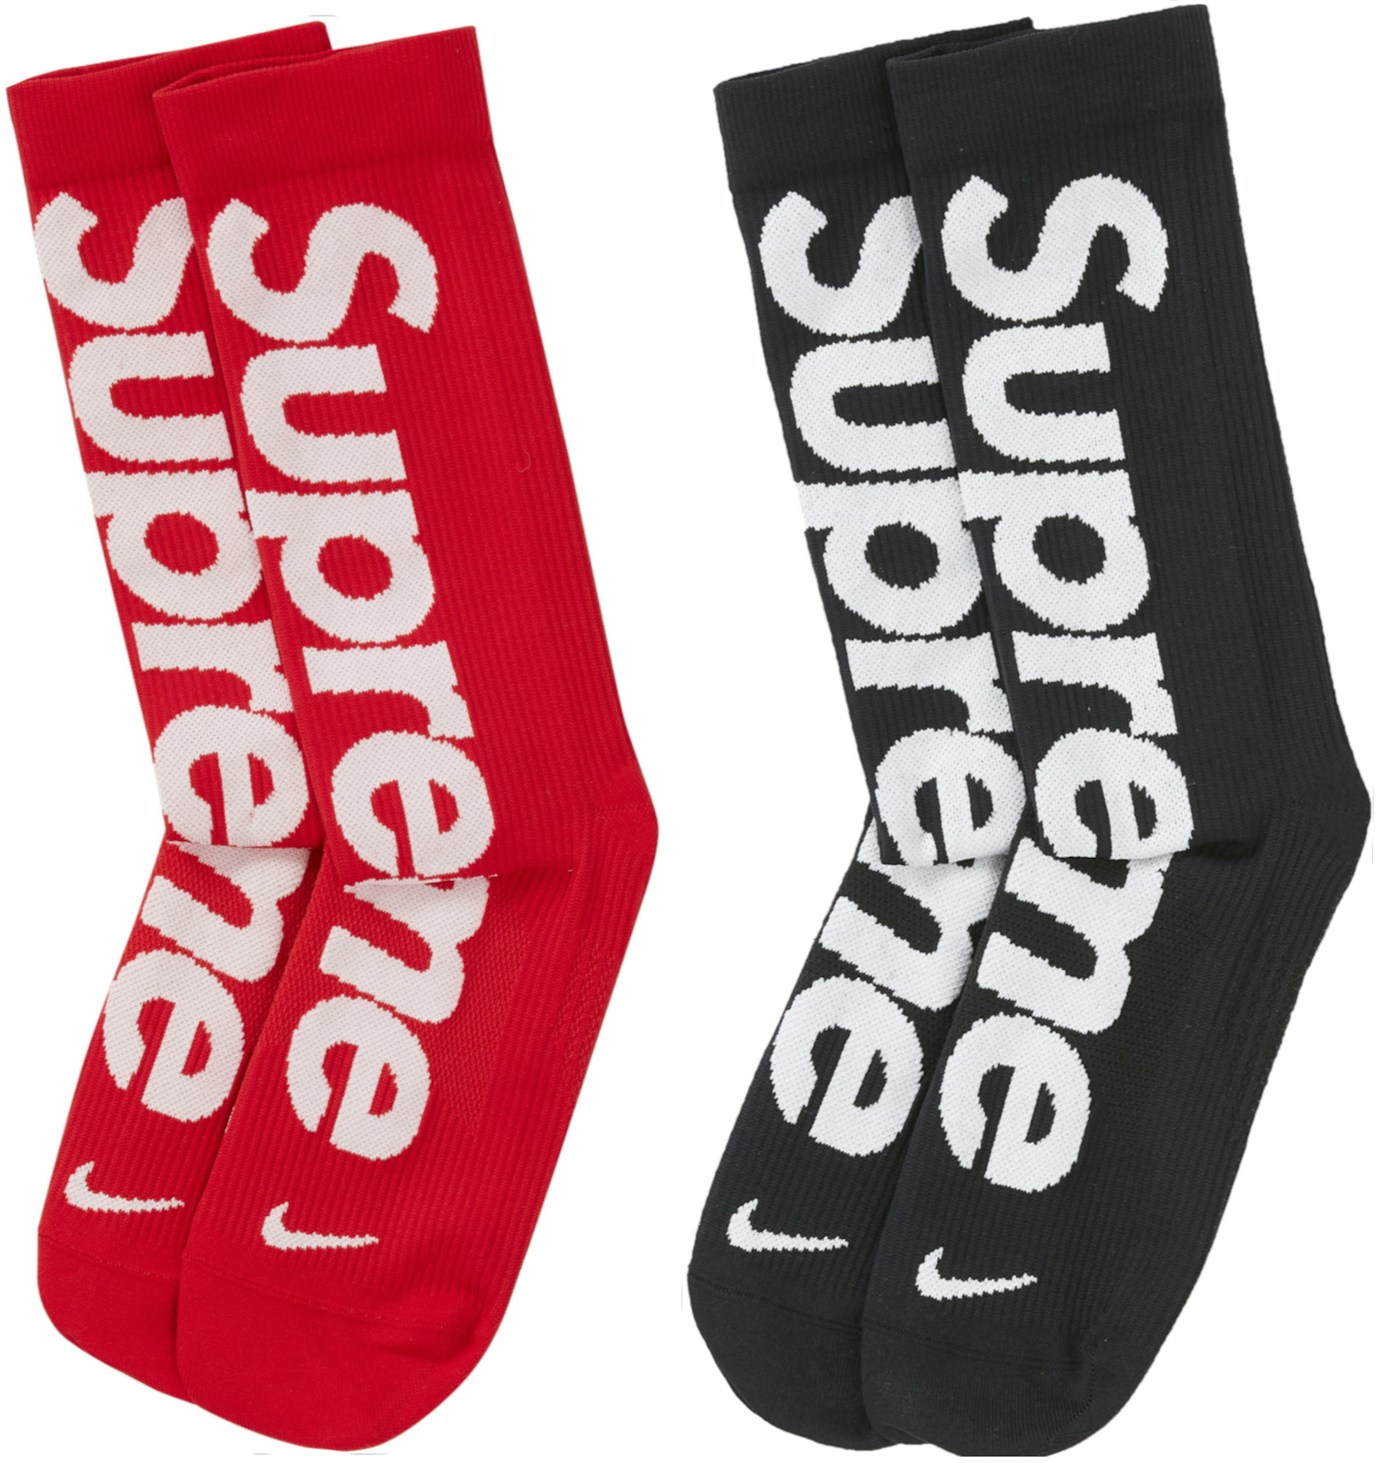 Supreme Nike Lightweight Crew Socks Set Red/Black - SS21